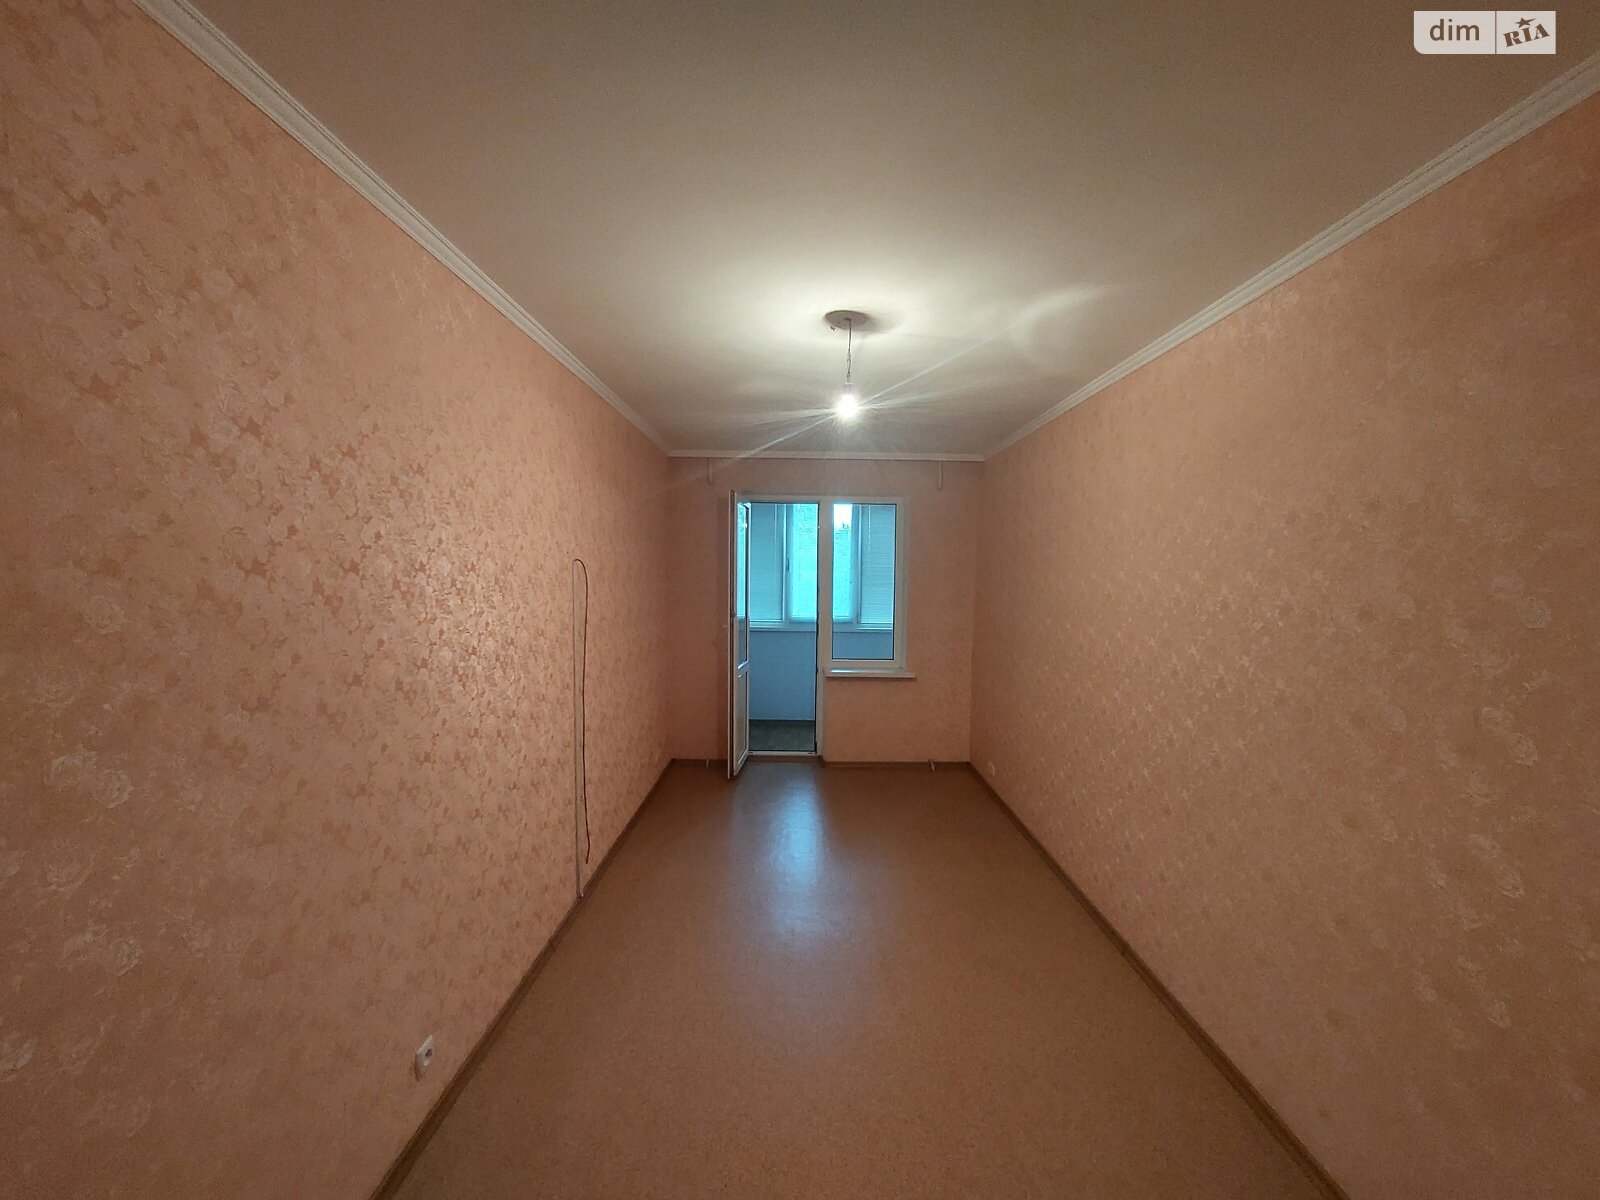 Продажа трехкомнатной квартиры в Николаеве, на просп. Мира, район Проспект Мира фото 1